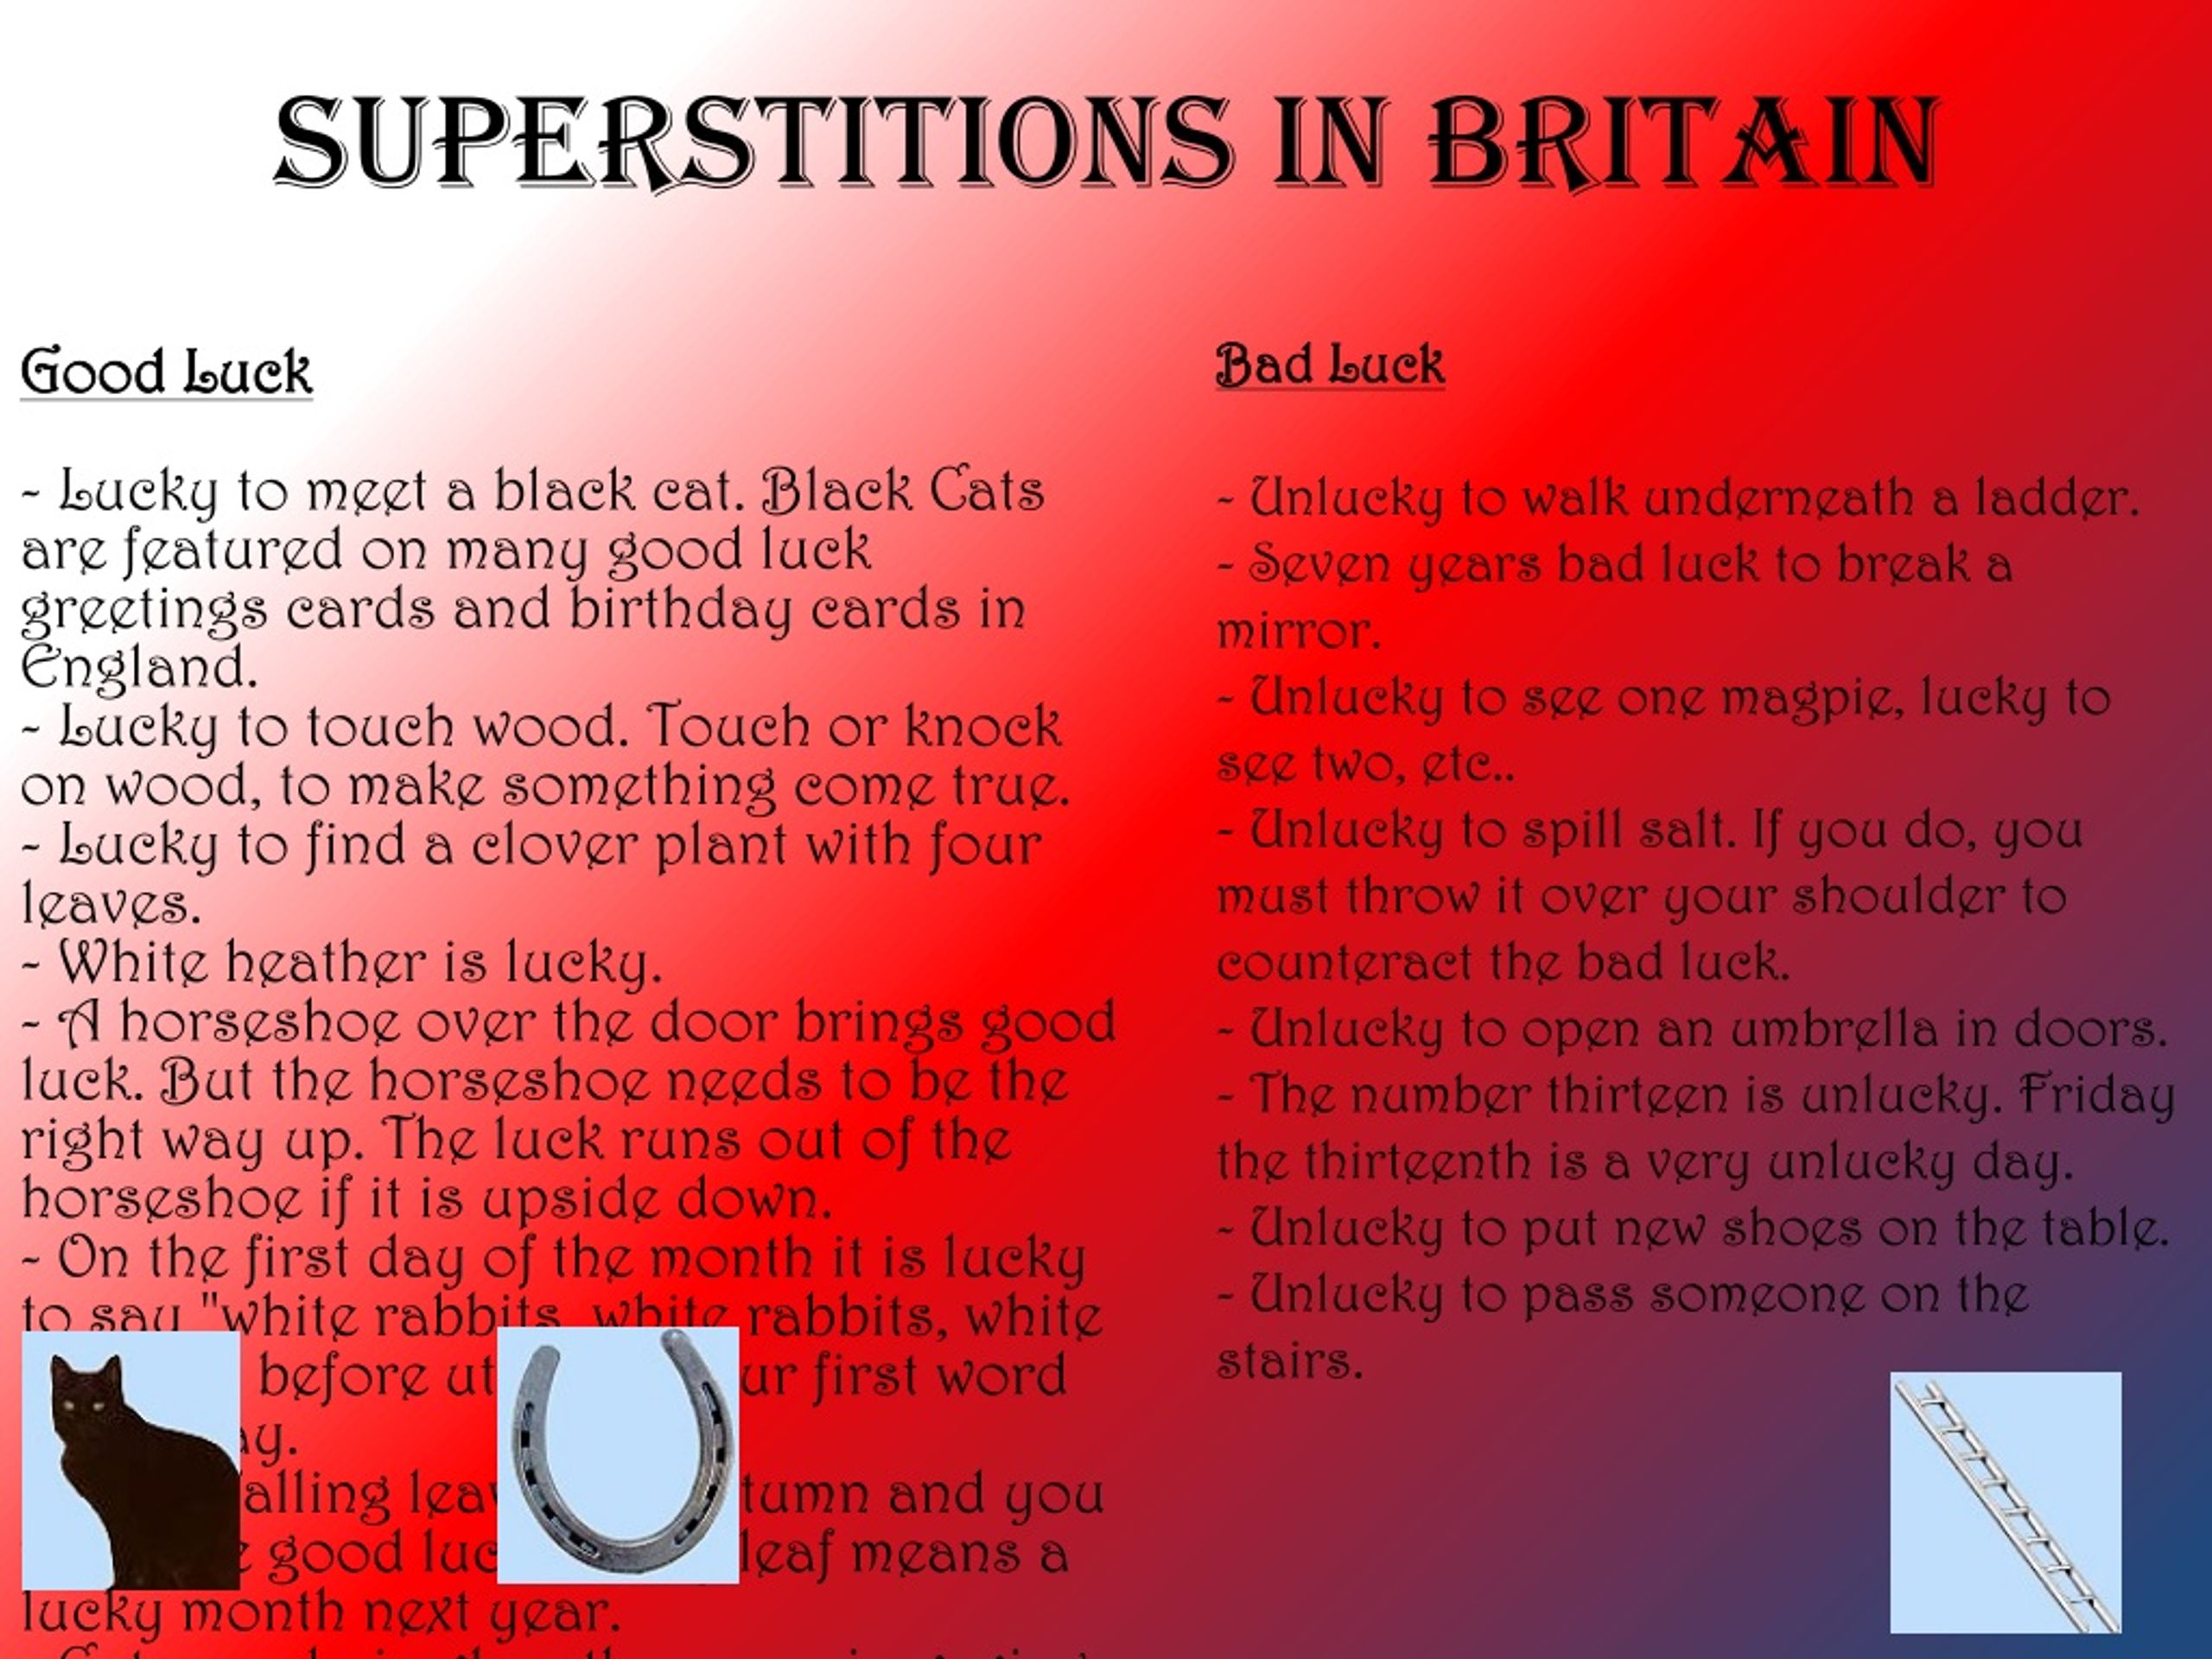 Kinds of superstitions. Суеверия на английском. Примеры суеверий на английском. Приметы на английском языке. Суеверия в Англии на английском языке.